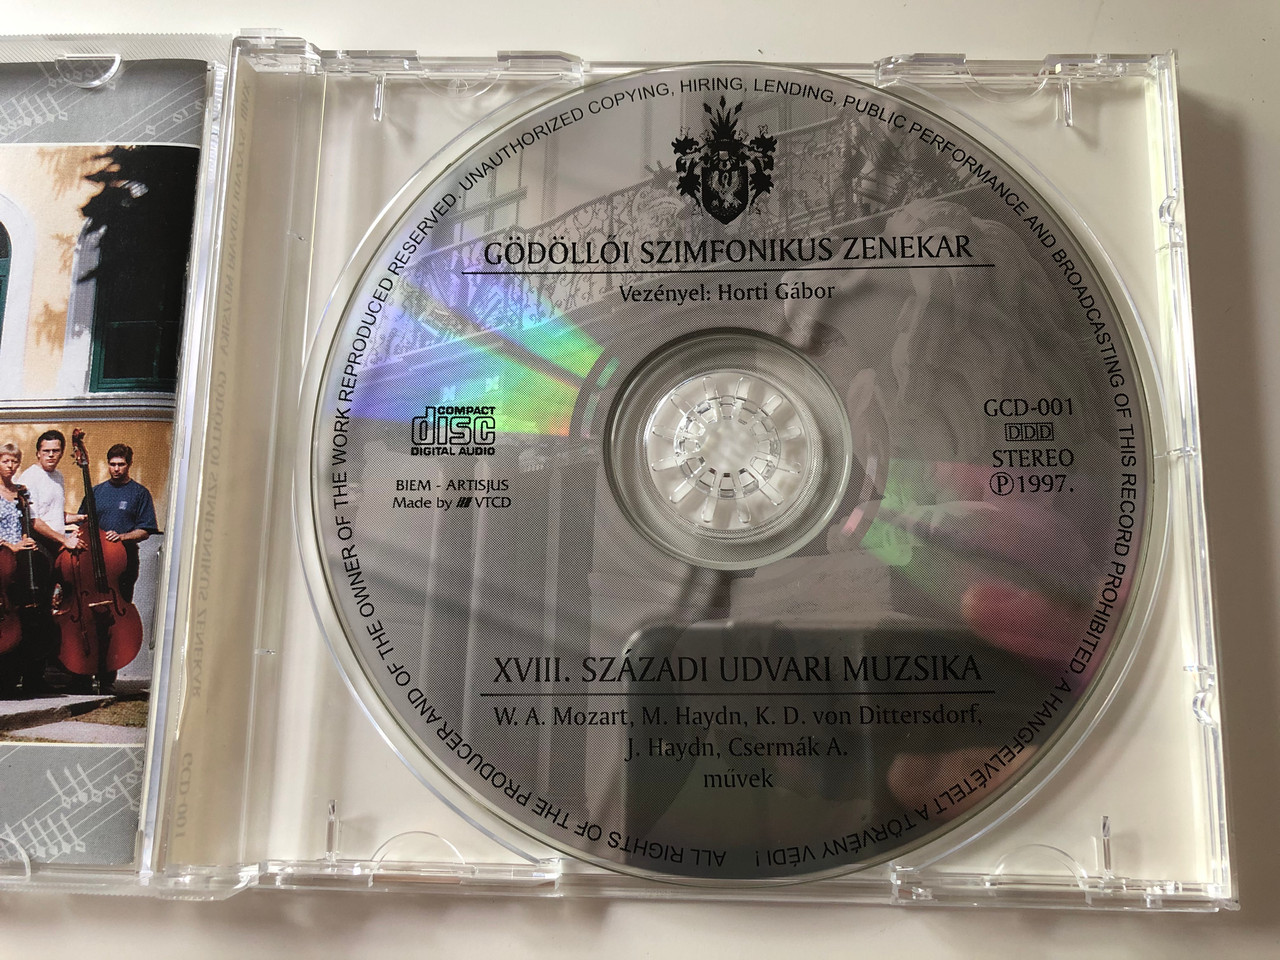 Századi Udvari Muzsika - Gödöllői Szimfonikus Zenekar / Godollo Varos Audio 1997 / GCD-001 - bibleinmylanguage